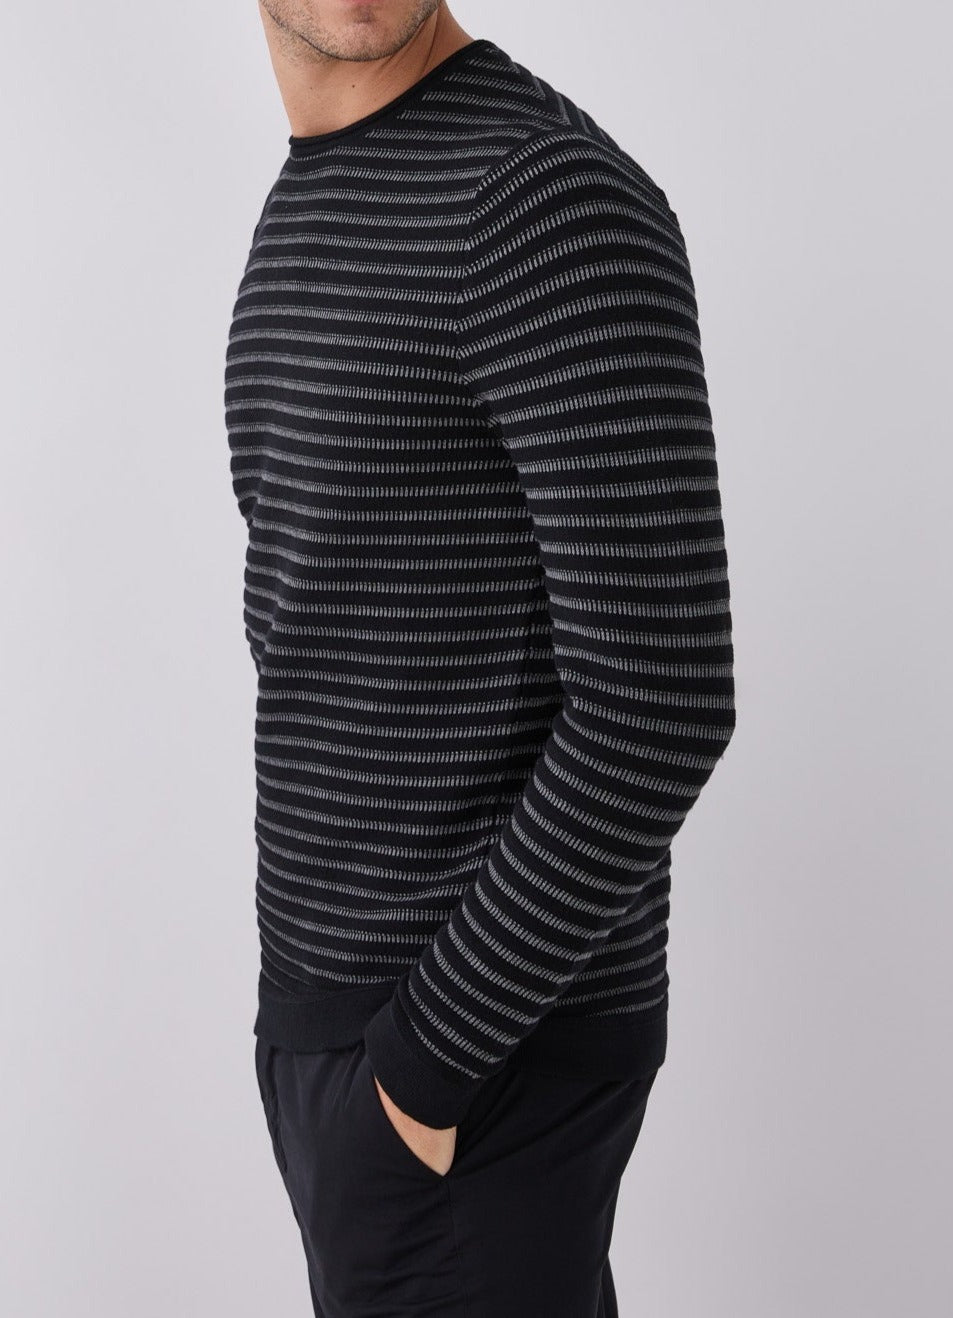 Men Jersey | Black Striped Cotton Sweater by Spanish designer Adolfo Dominguez